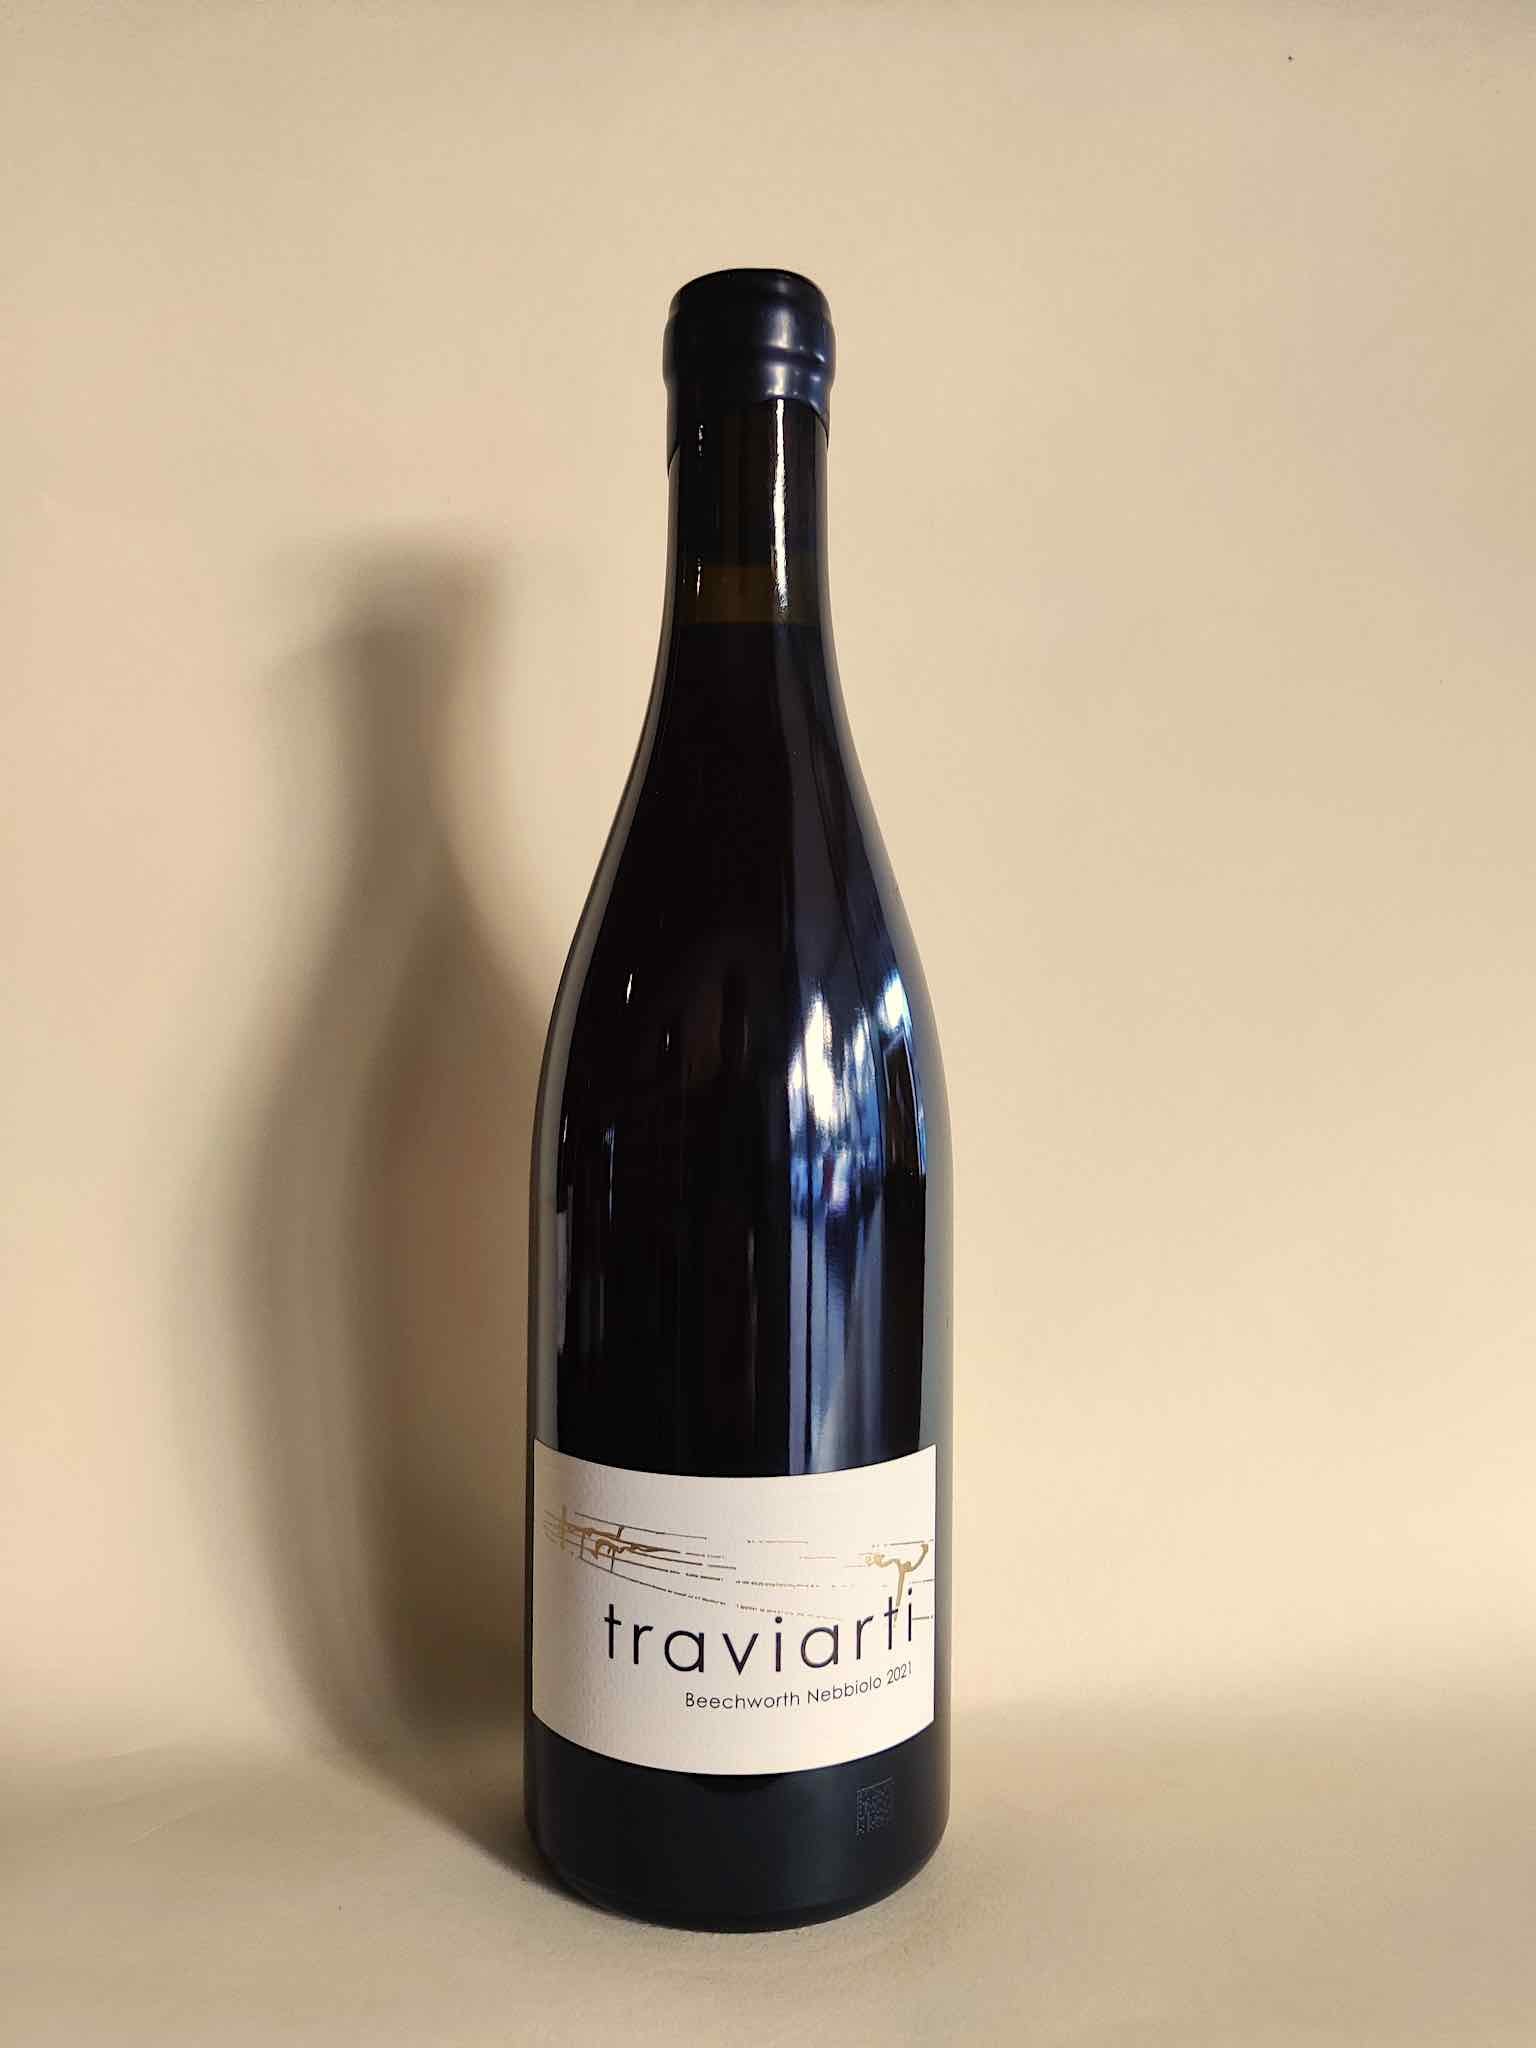 A bottle of Traviarti Nebbiolo from Beechworth, Victoria. 